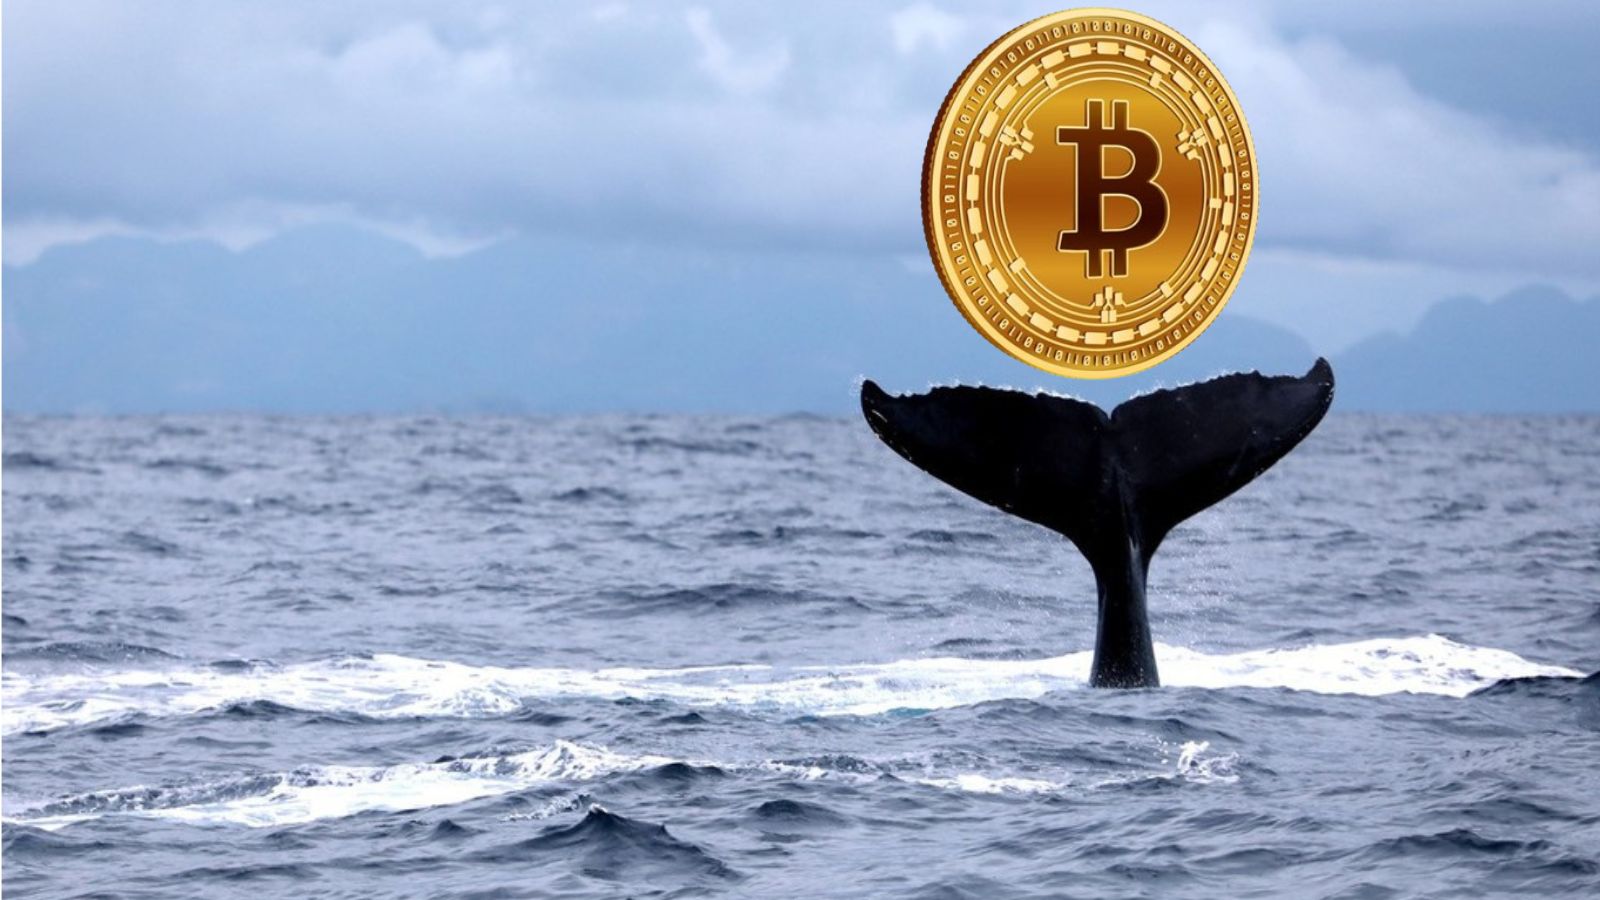 Baleia Bitcoin